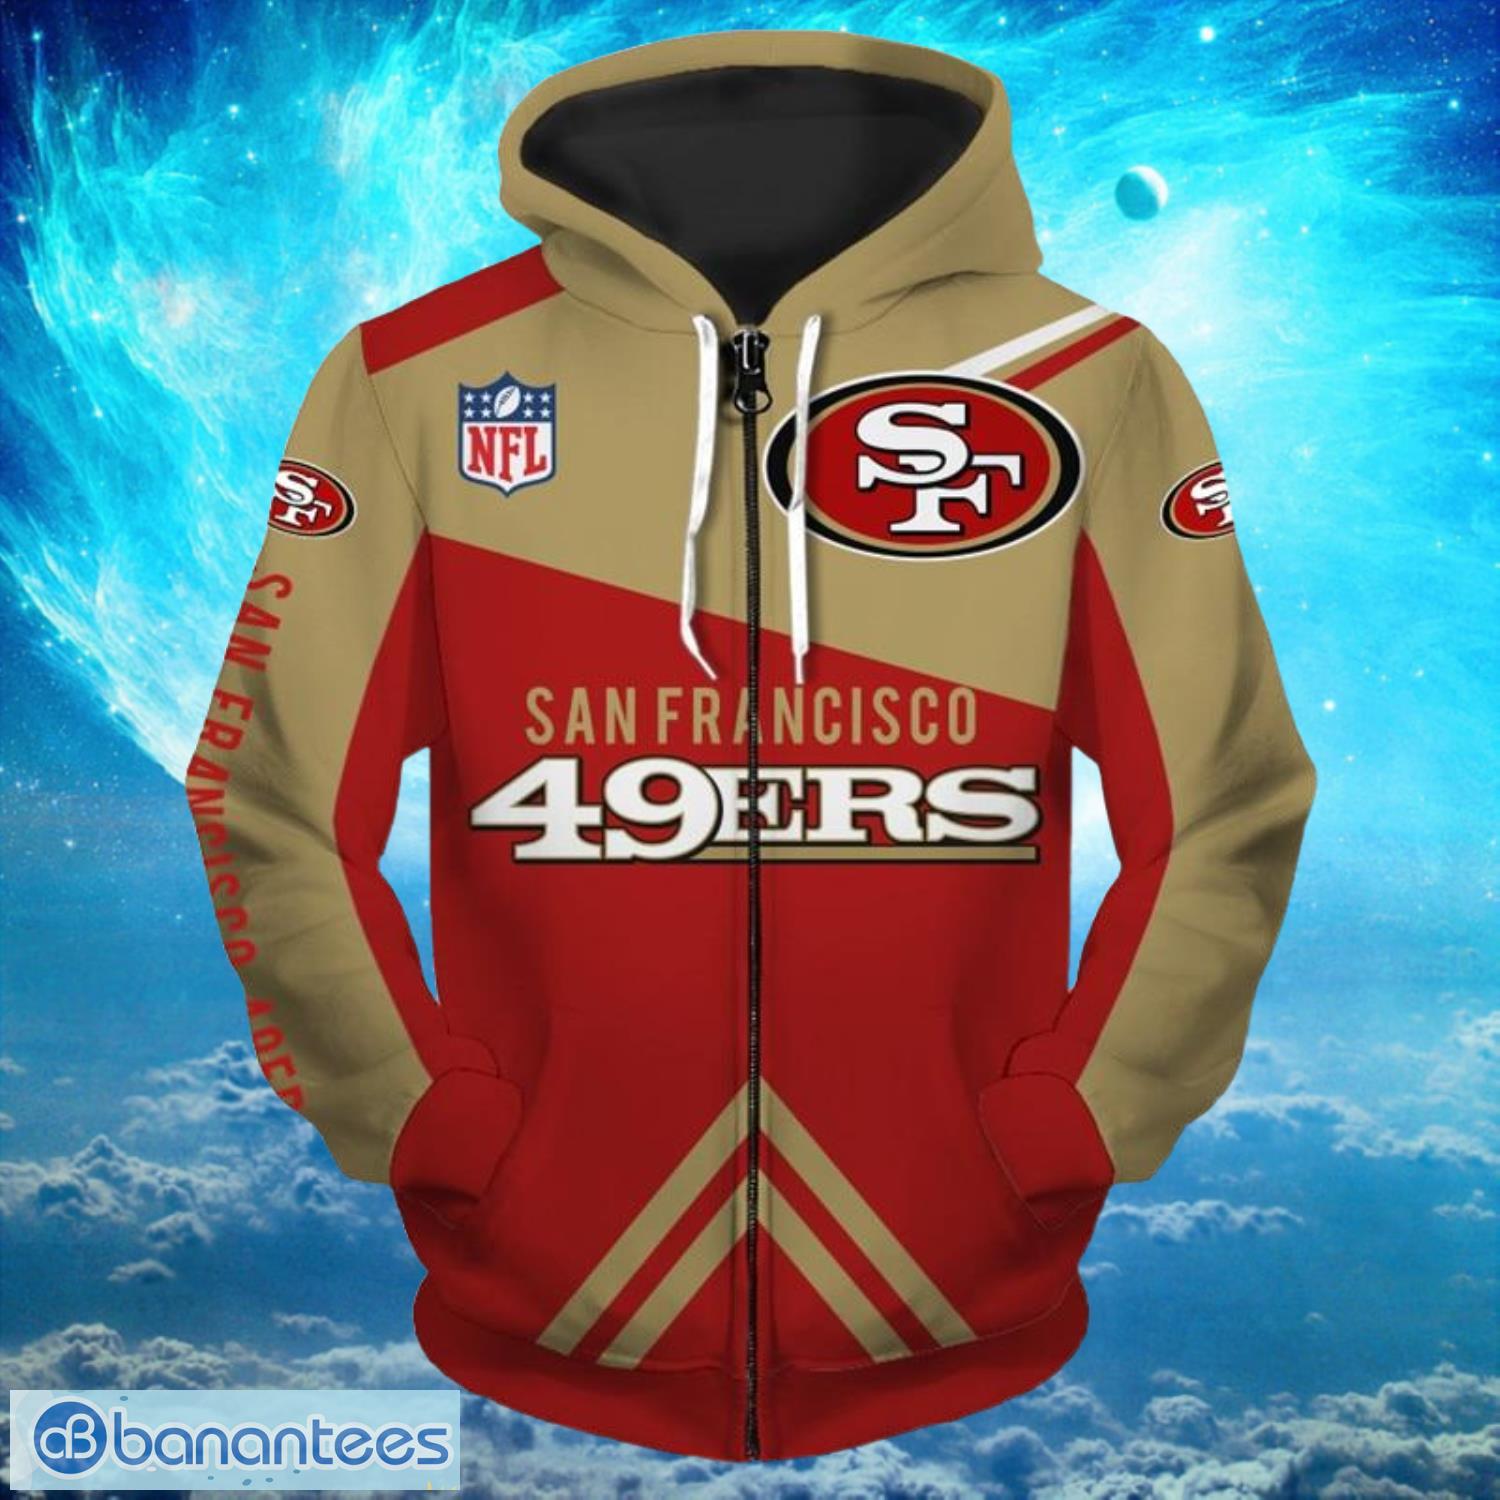 San Francisco 49ers NFL Fans Zip Hoodies Print Full Product Photo 1